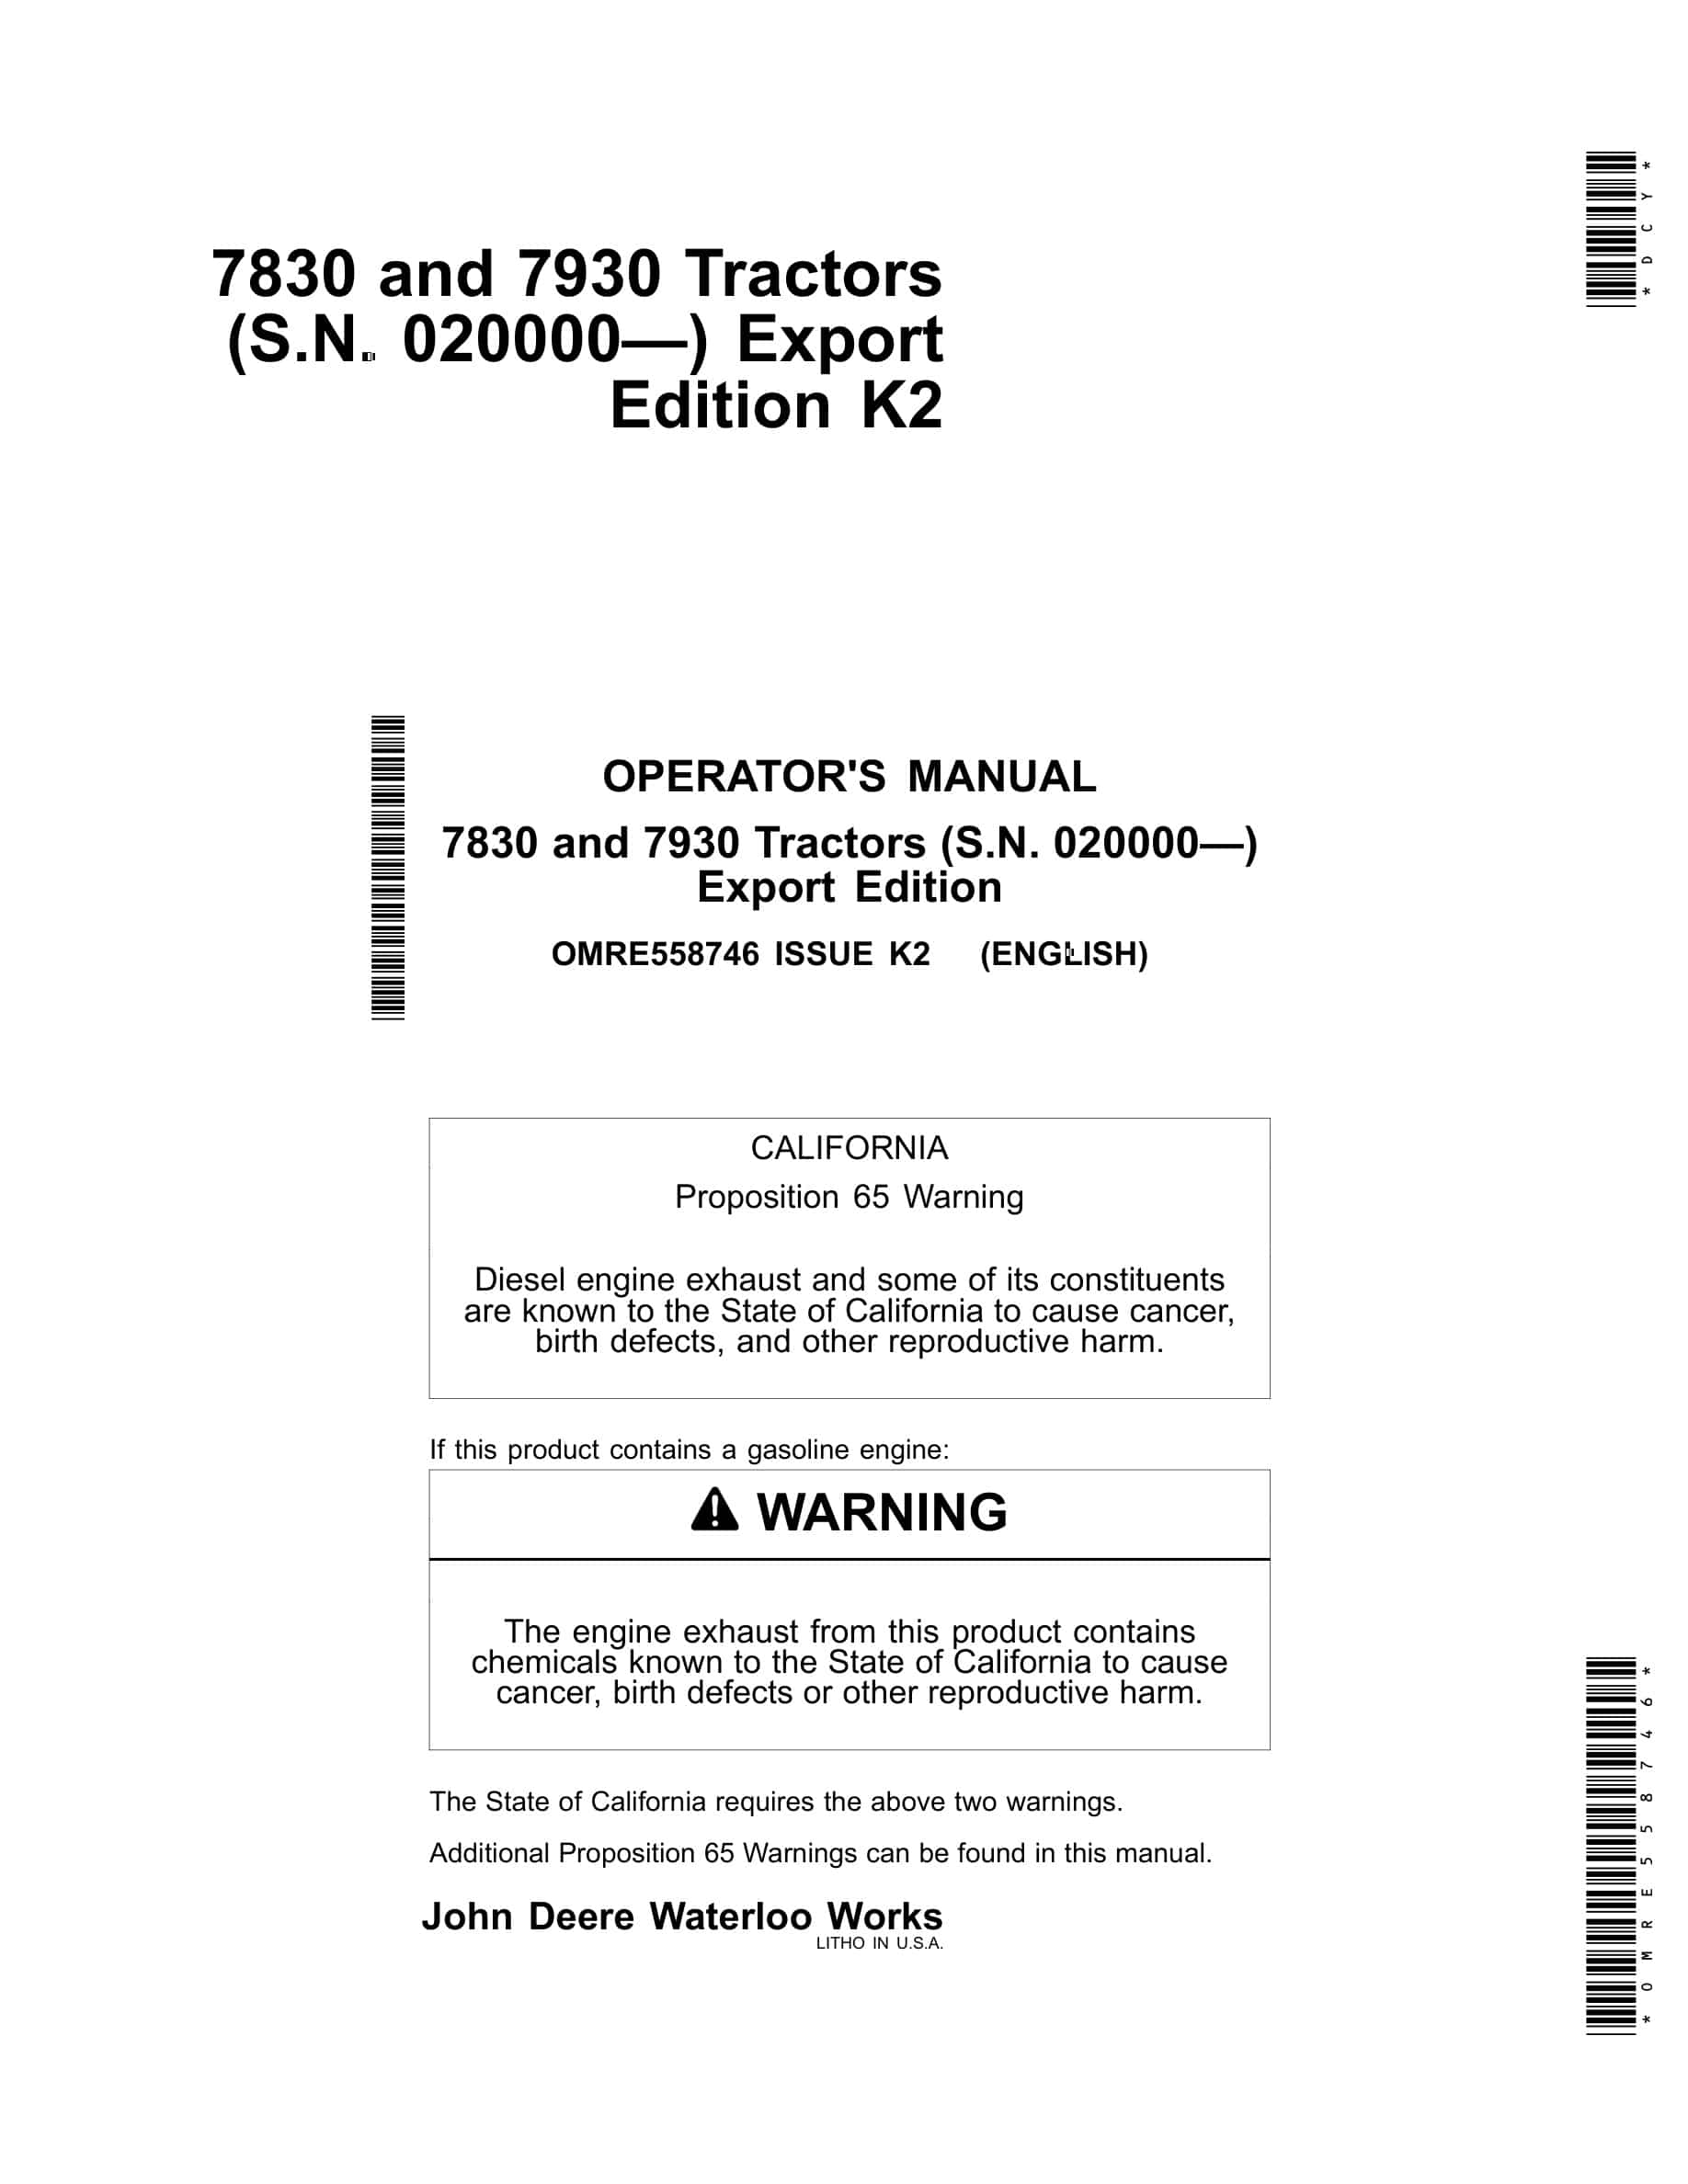 John Deere 7830 And 7930 Tractors Operator Manuals OMRE558746-1